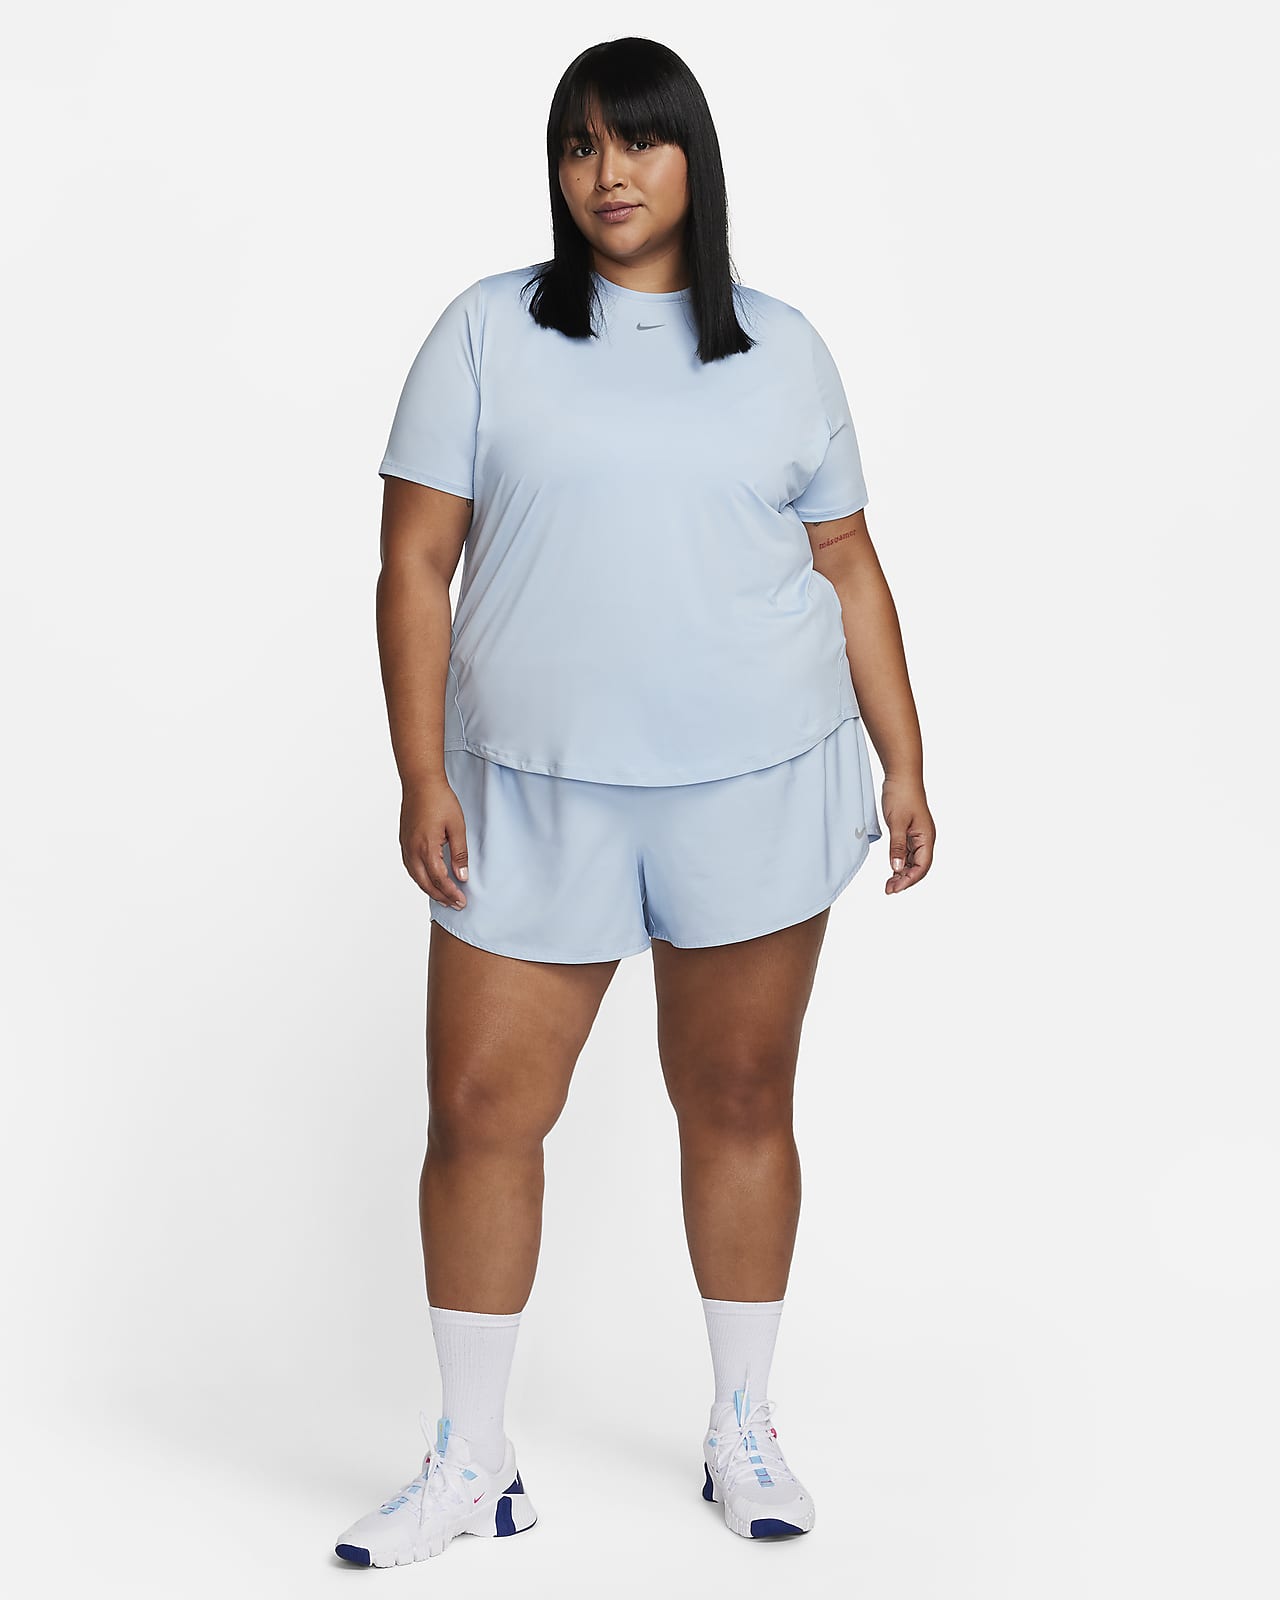 Nike One Classic Women's Dri-FIT Short-Sleeve Top (Plus Size).